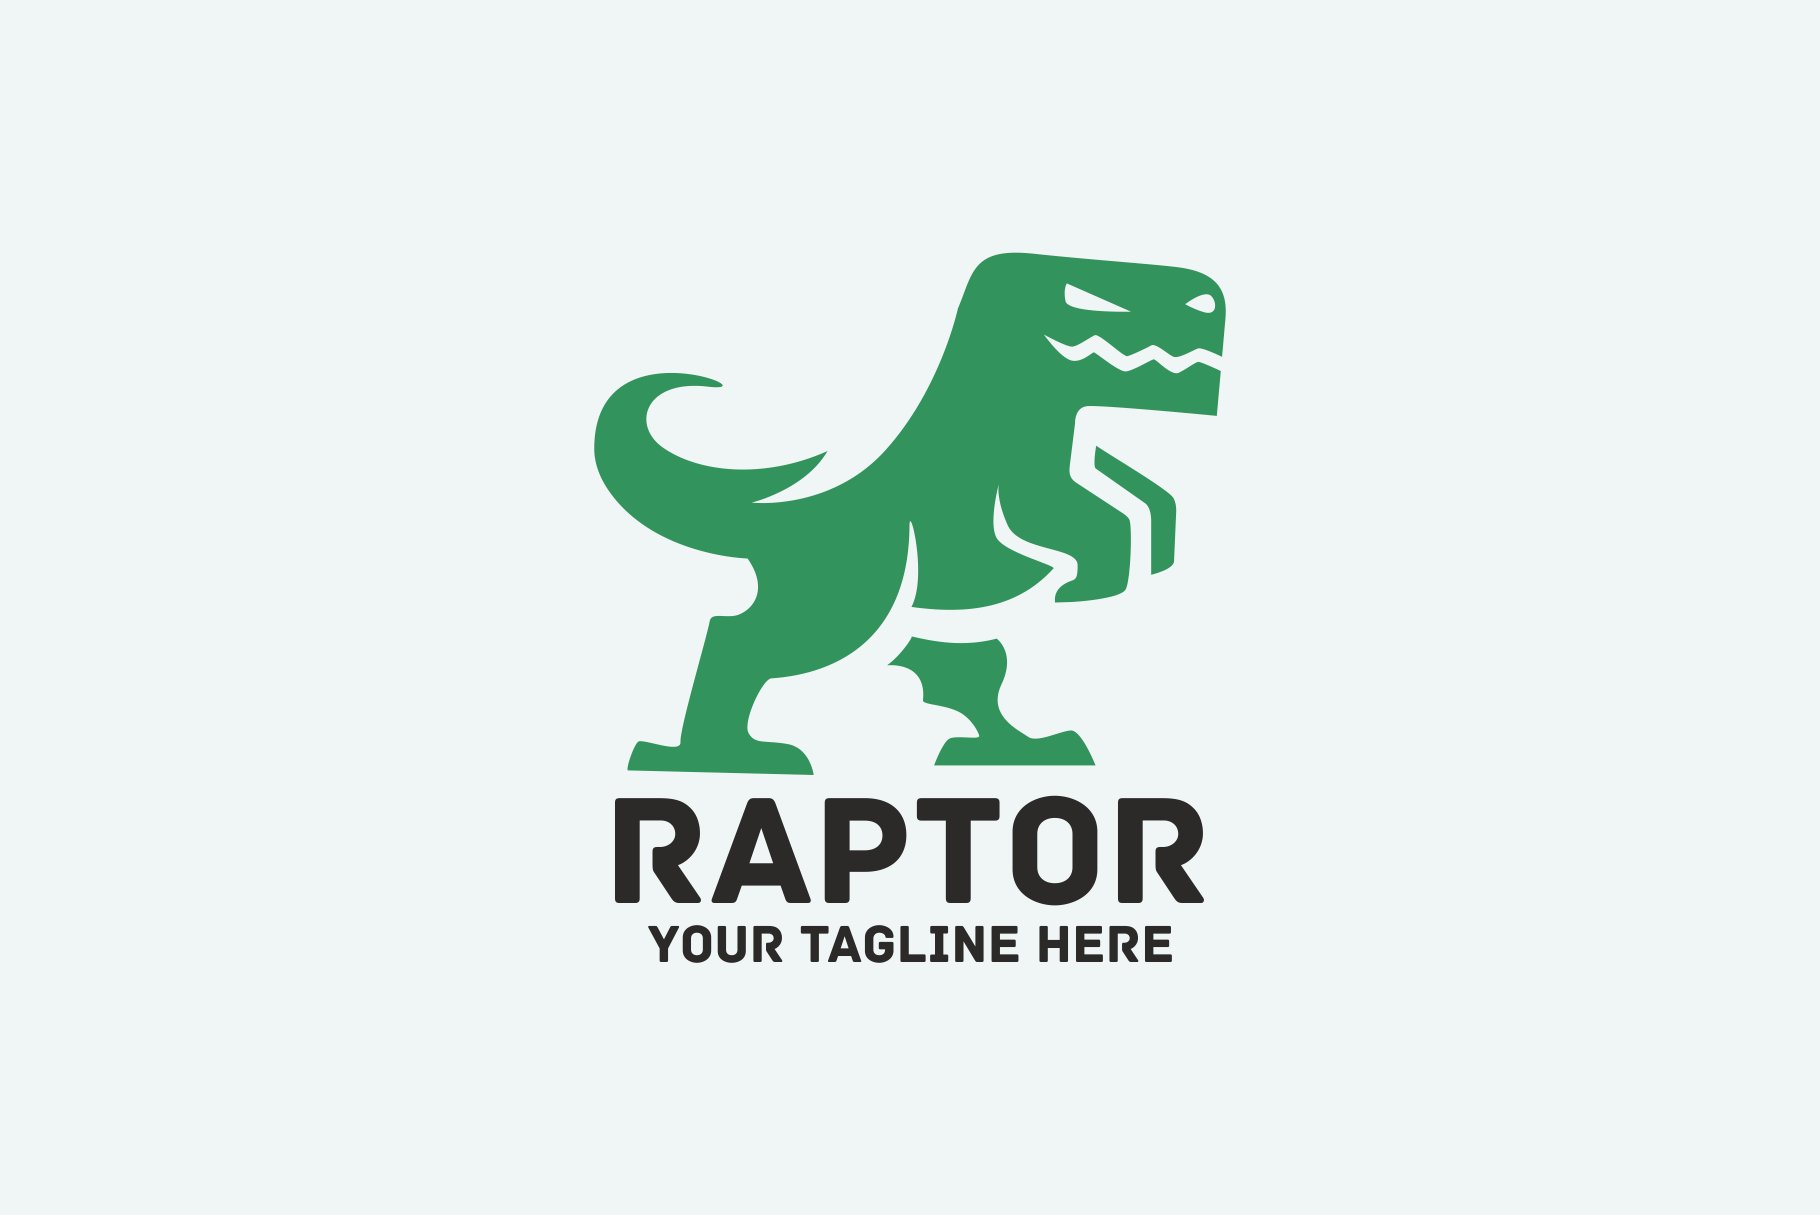 Raptor Logo cover image.